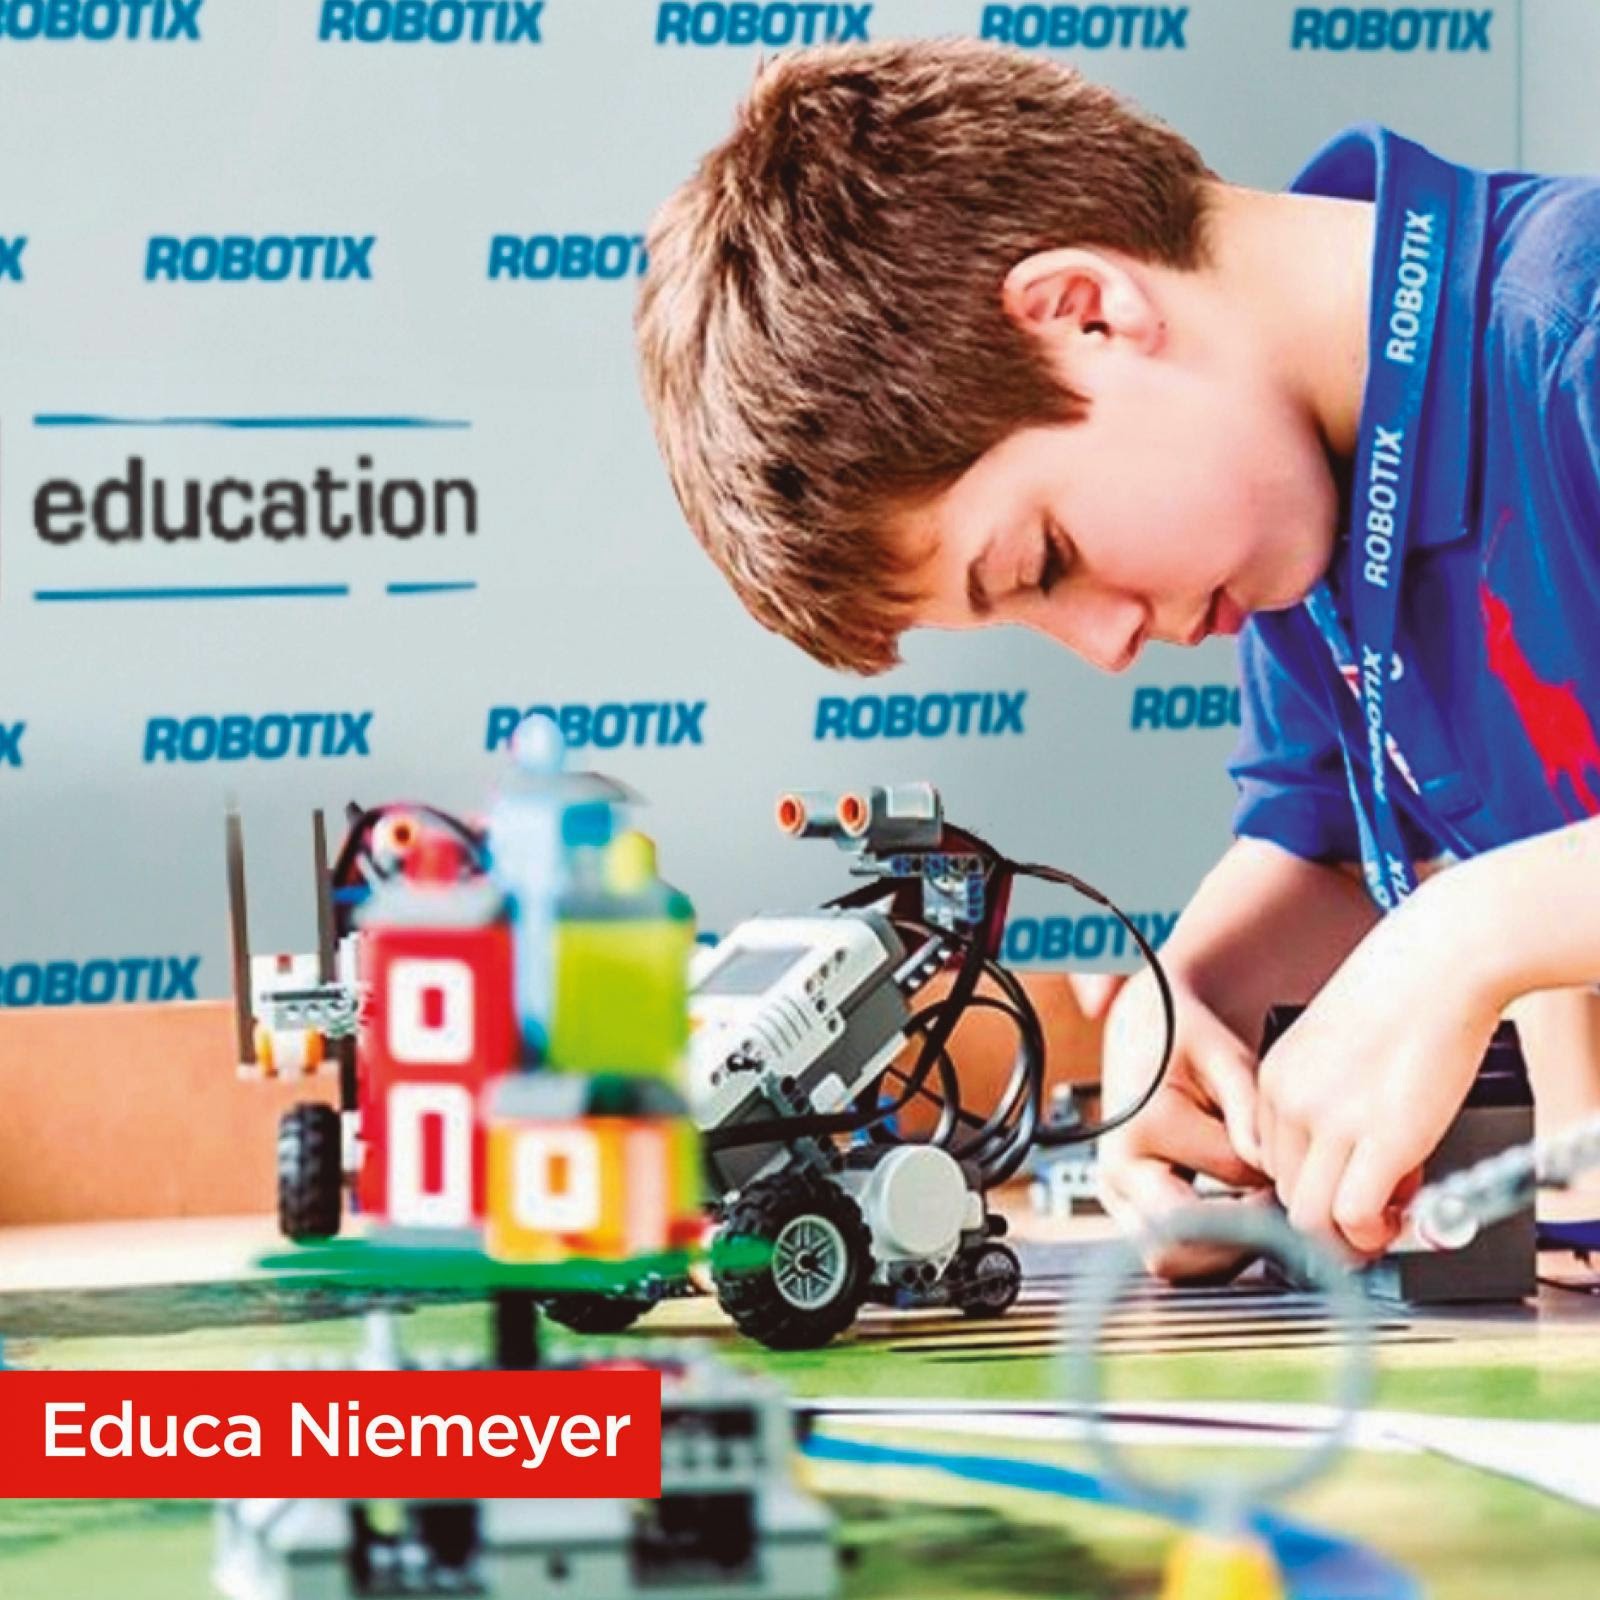 http://www.educaniemeyer.org/p778867-robotix-educa-niemeyer.html